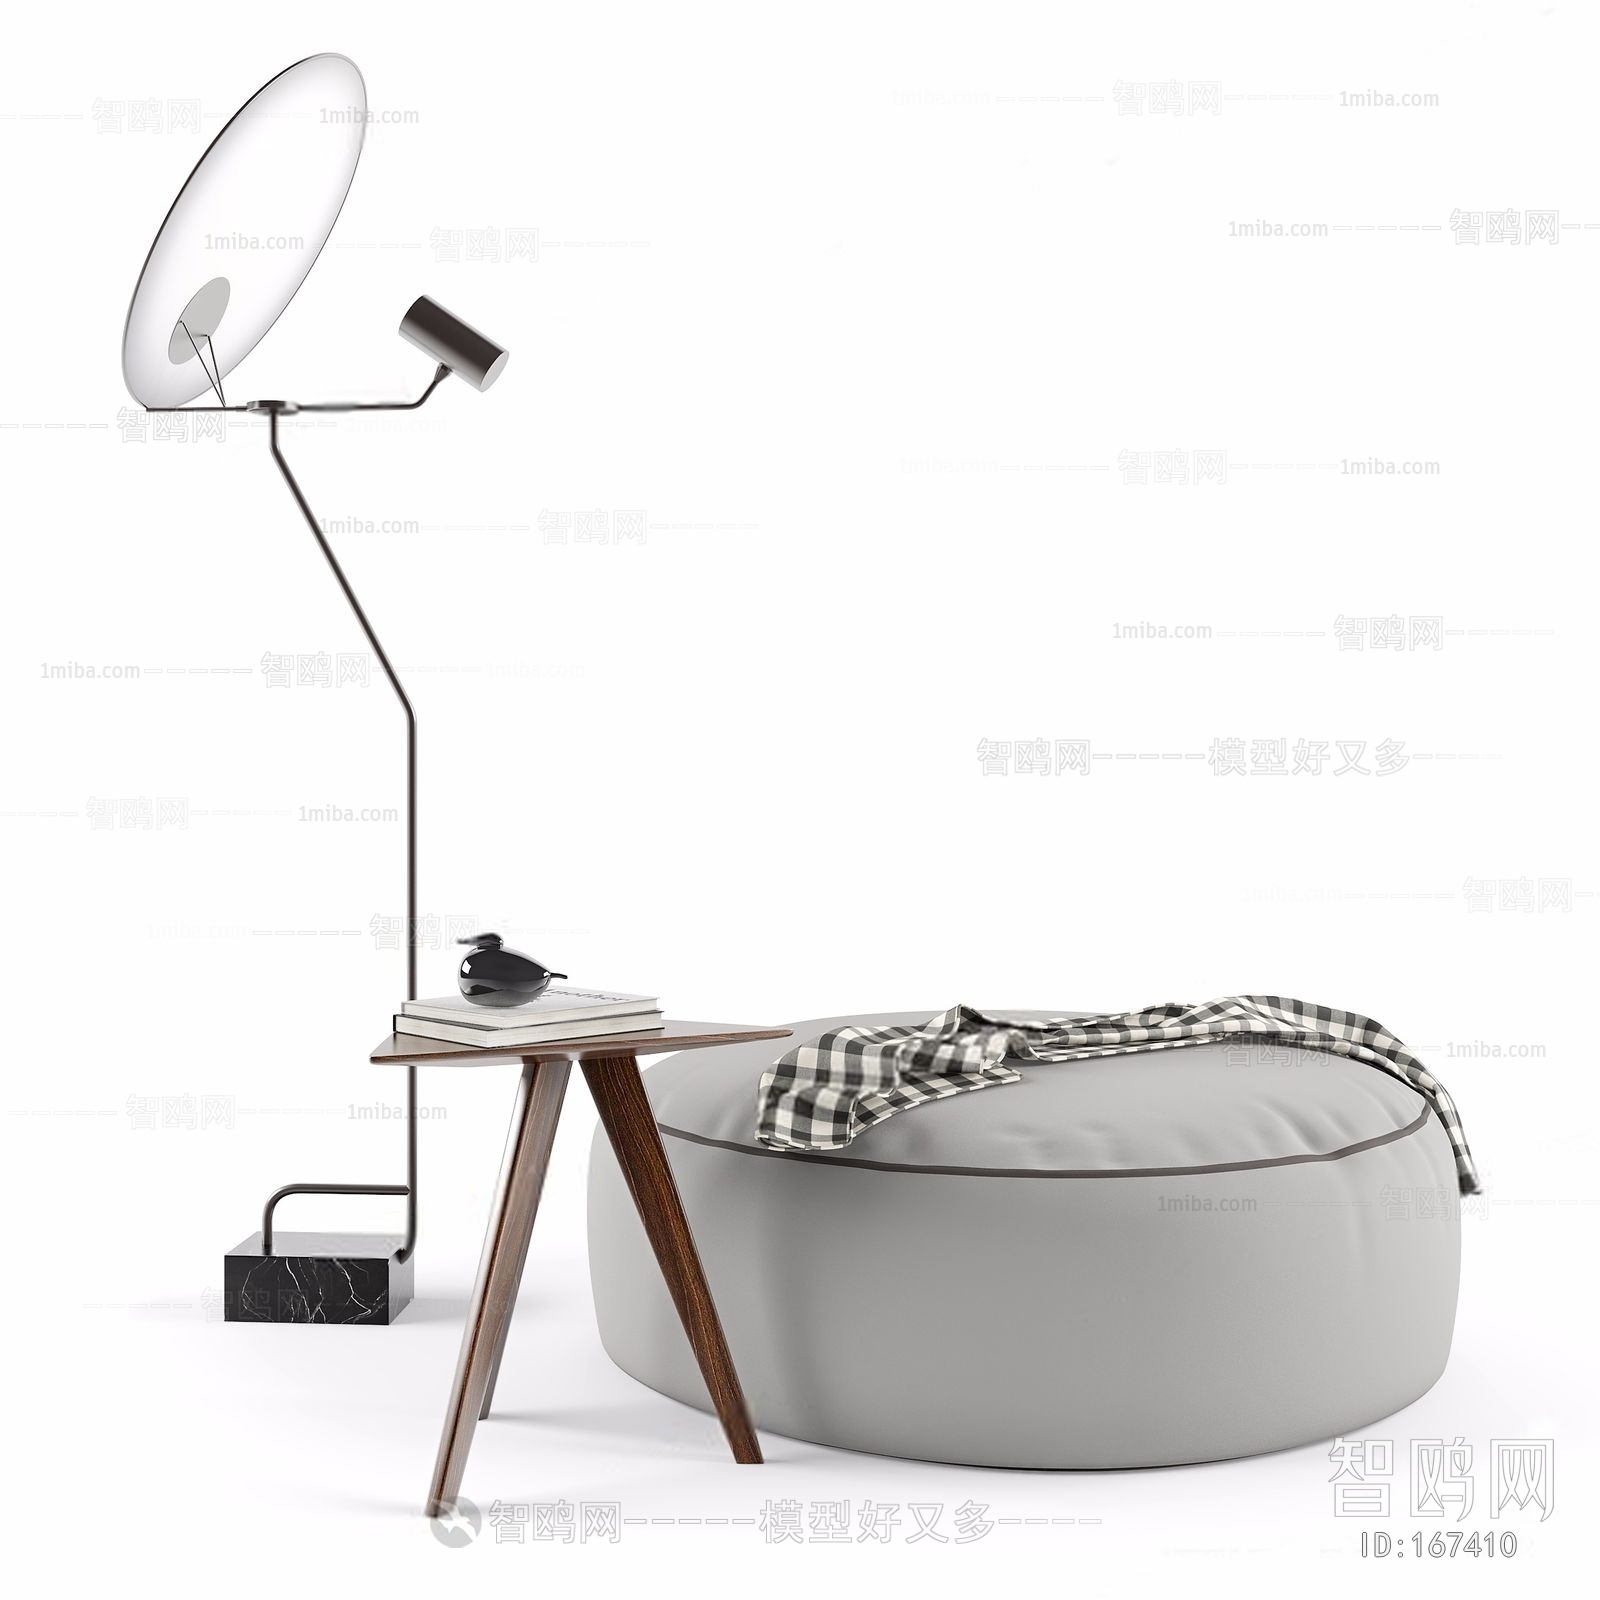 Nordic Style Floor Lamp